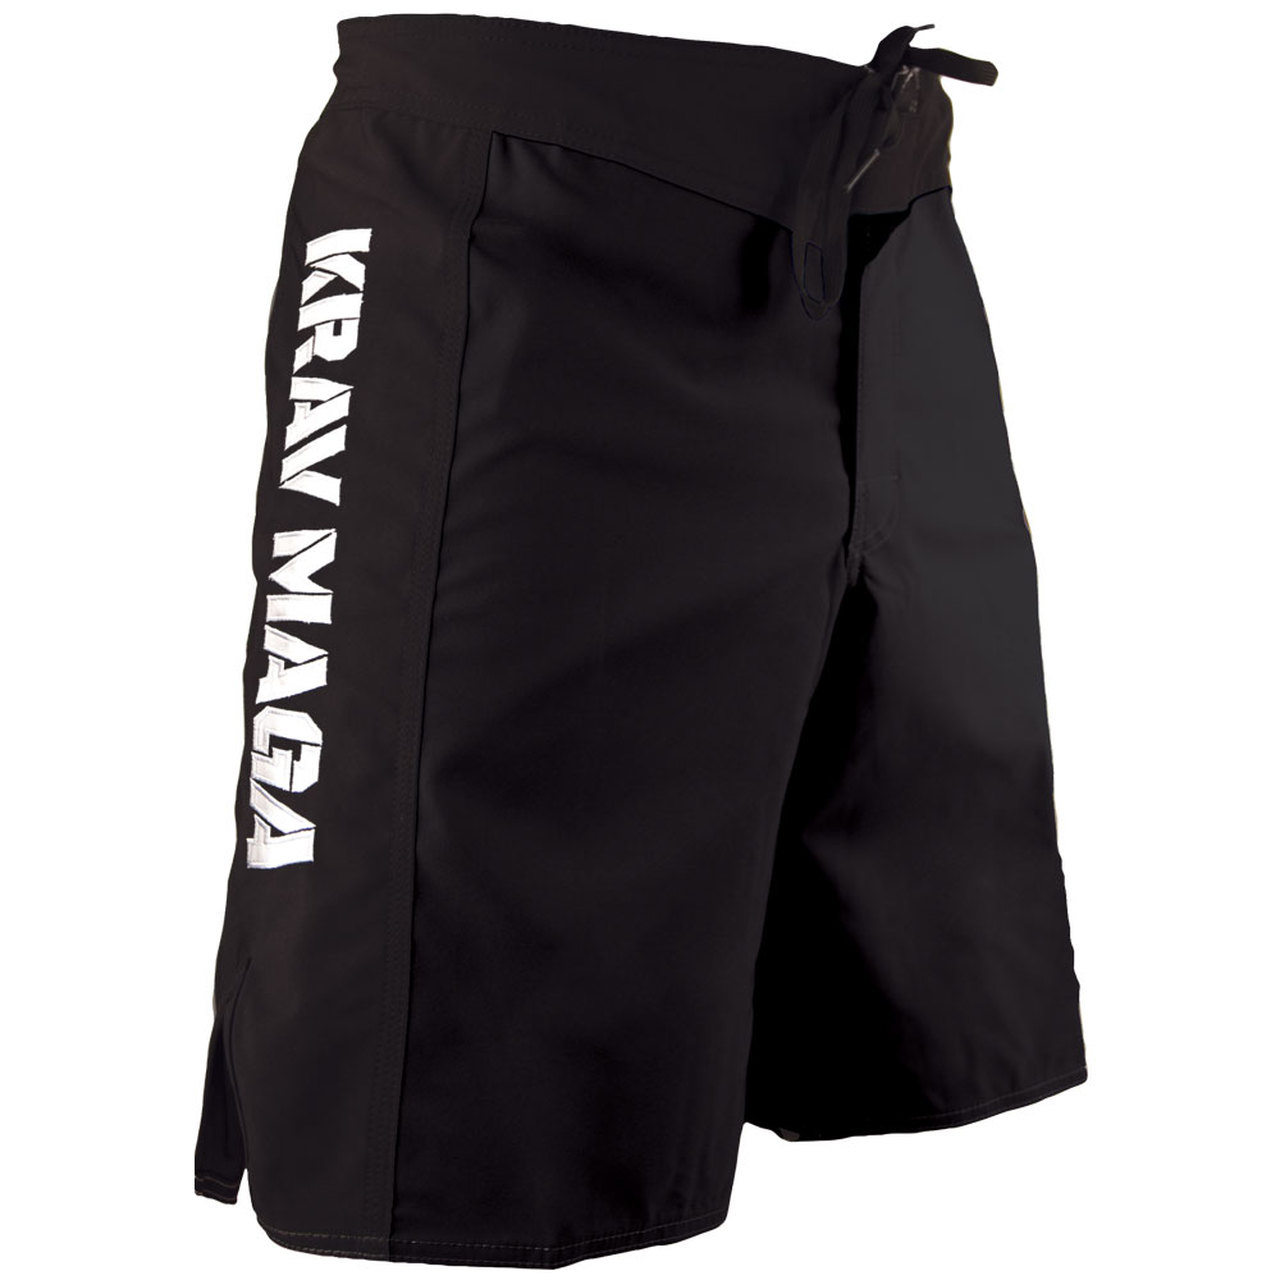 Krav Maga Black Ops One Shorts